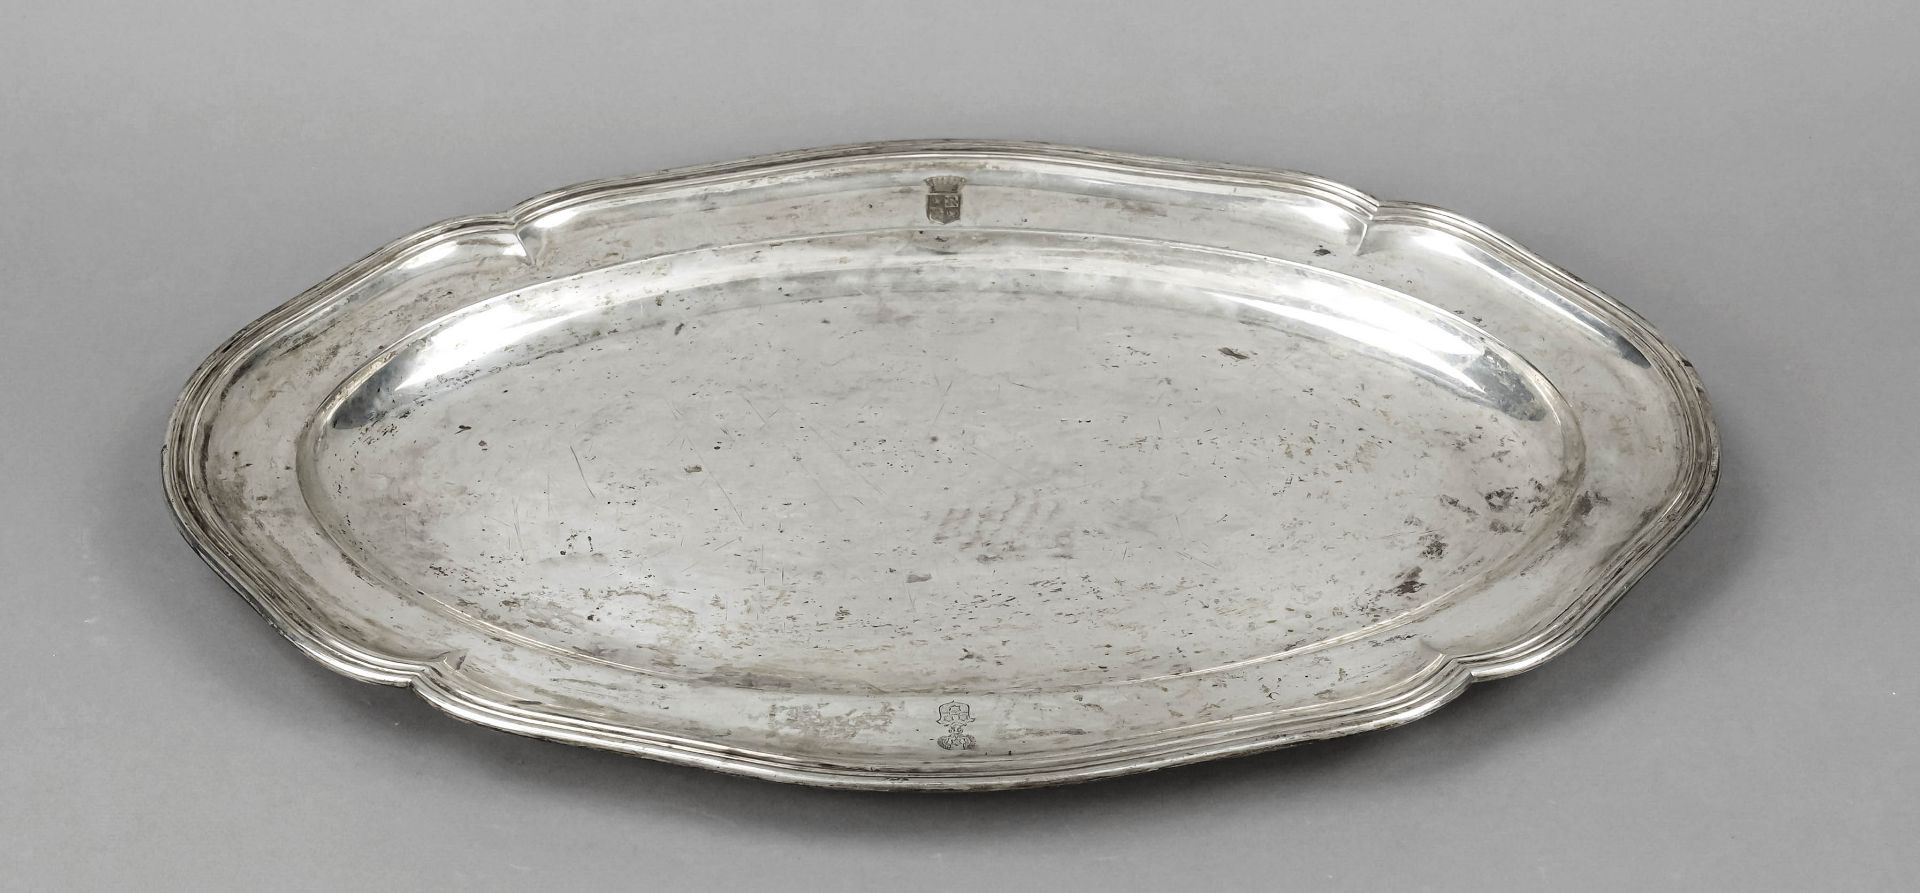 Oval plate, German, c. 1900, maker's mark M. H. Wilkens & Söhne, Bremen-Hemelingen, silver 800/